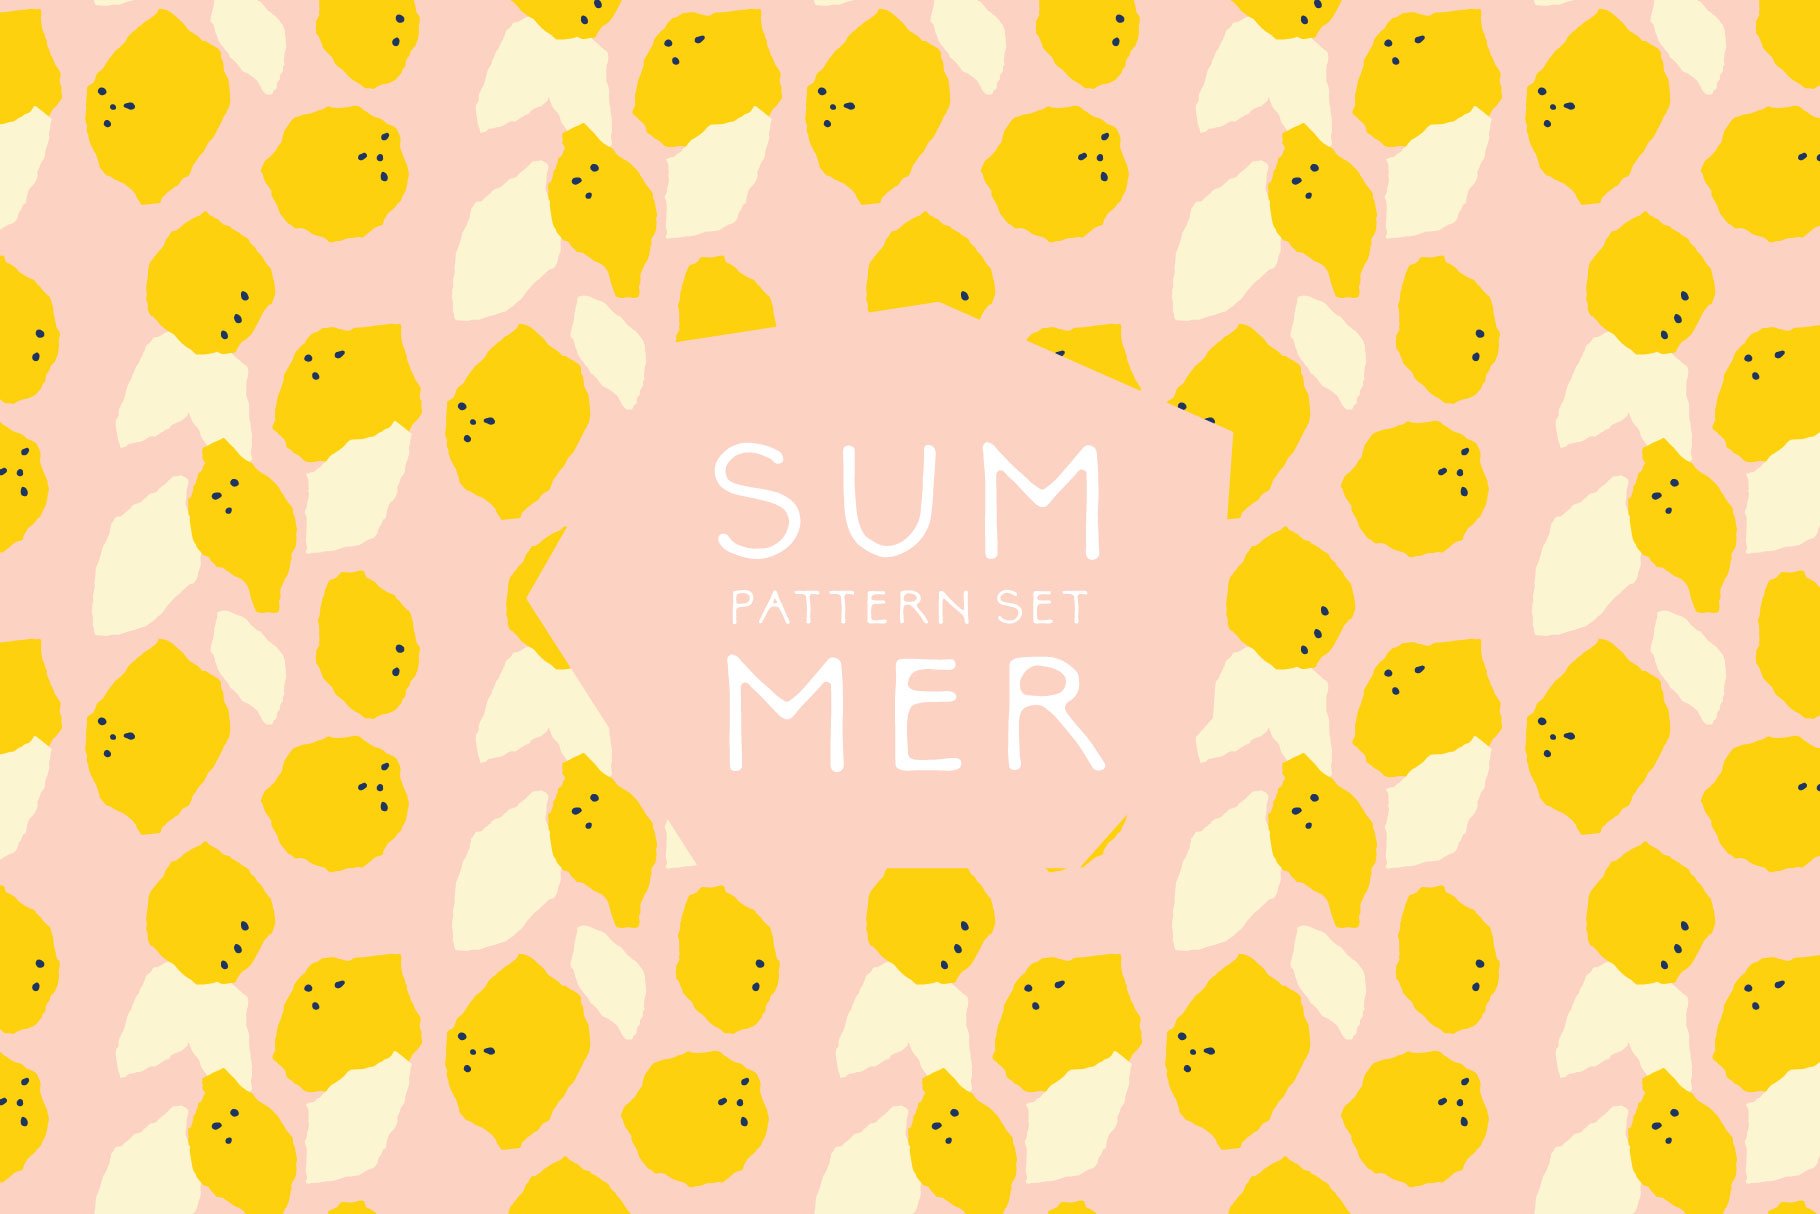 Summer Pattern Set cover image.